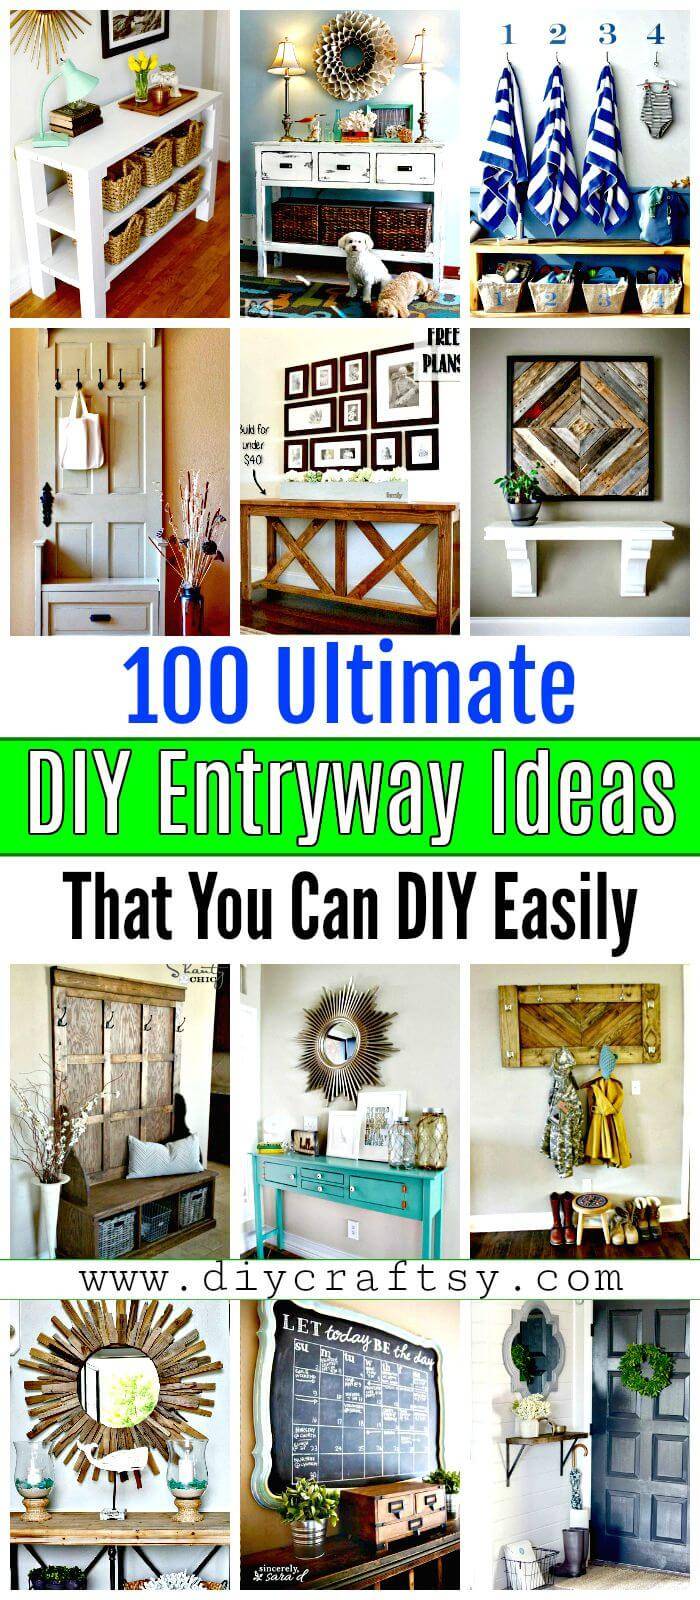 100 Ultimate DIY Entryway Ideas That You Can DIY Easily - DIY Projects - DIY Crafts - DIY Home Decor Ideas